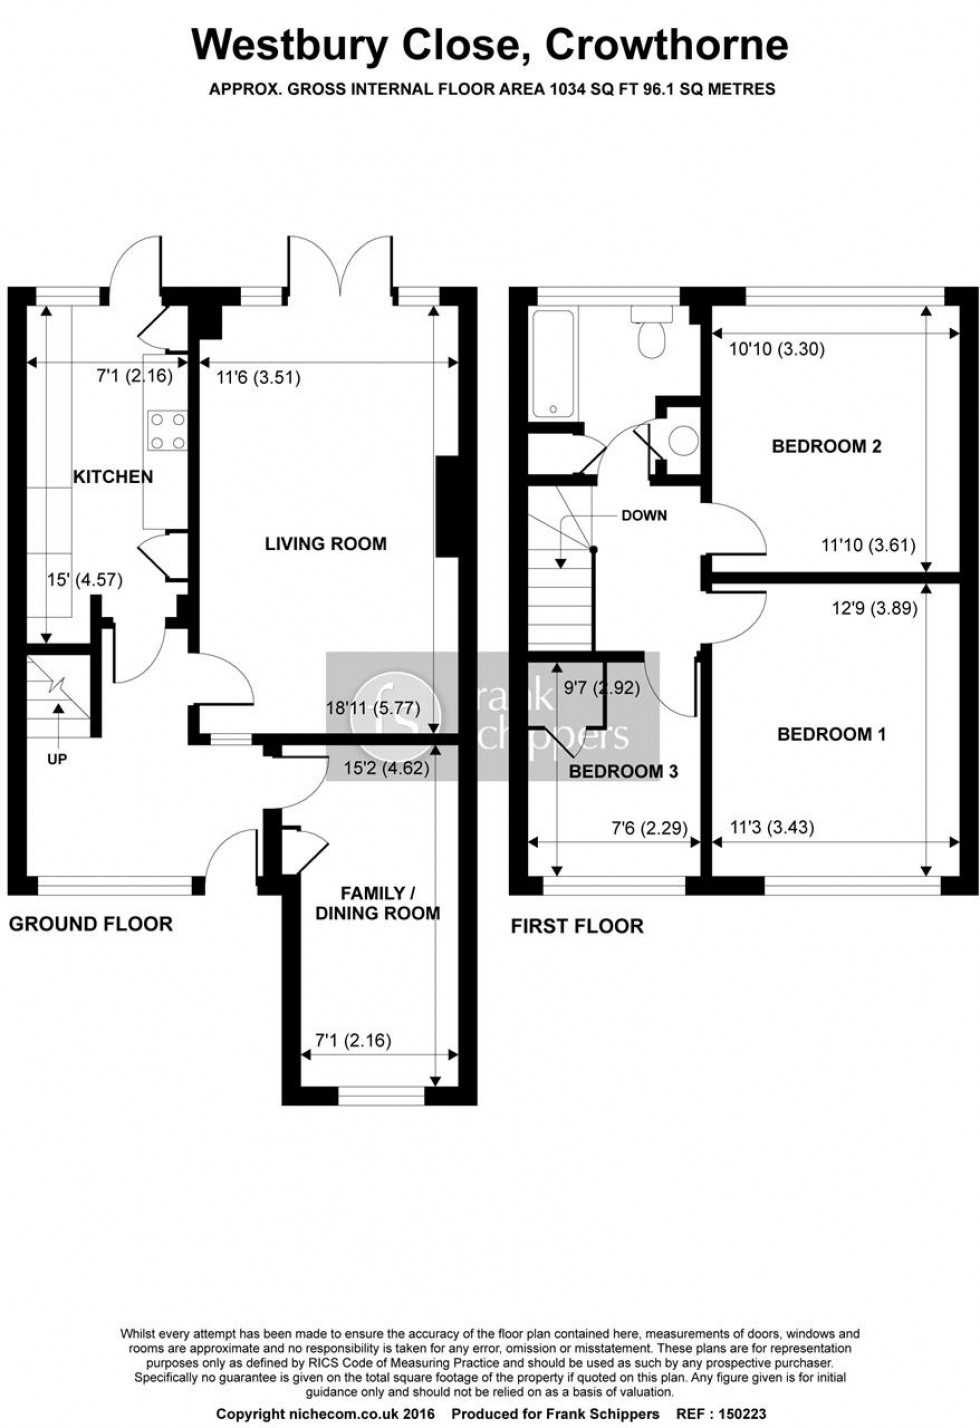 Floorplan for Westbury Close, Crowthorne